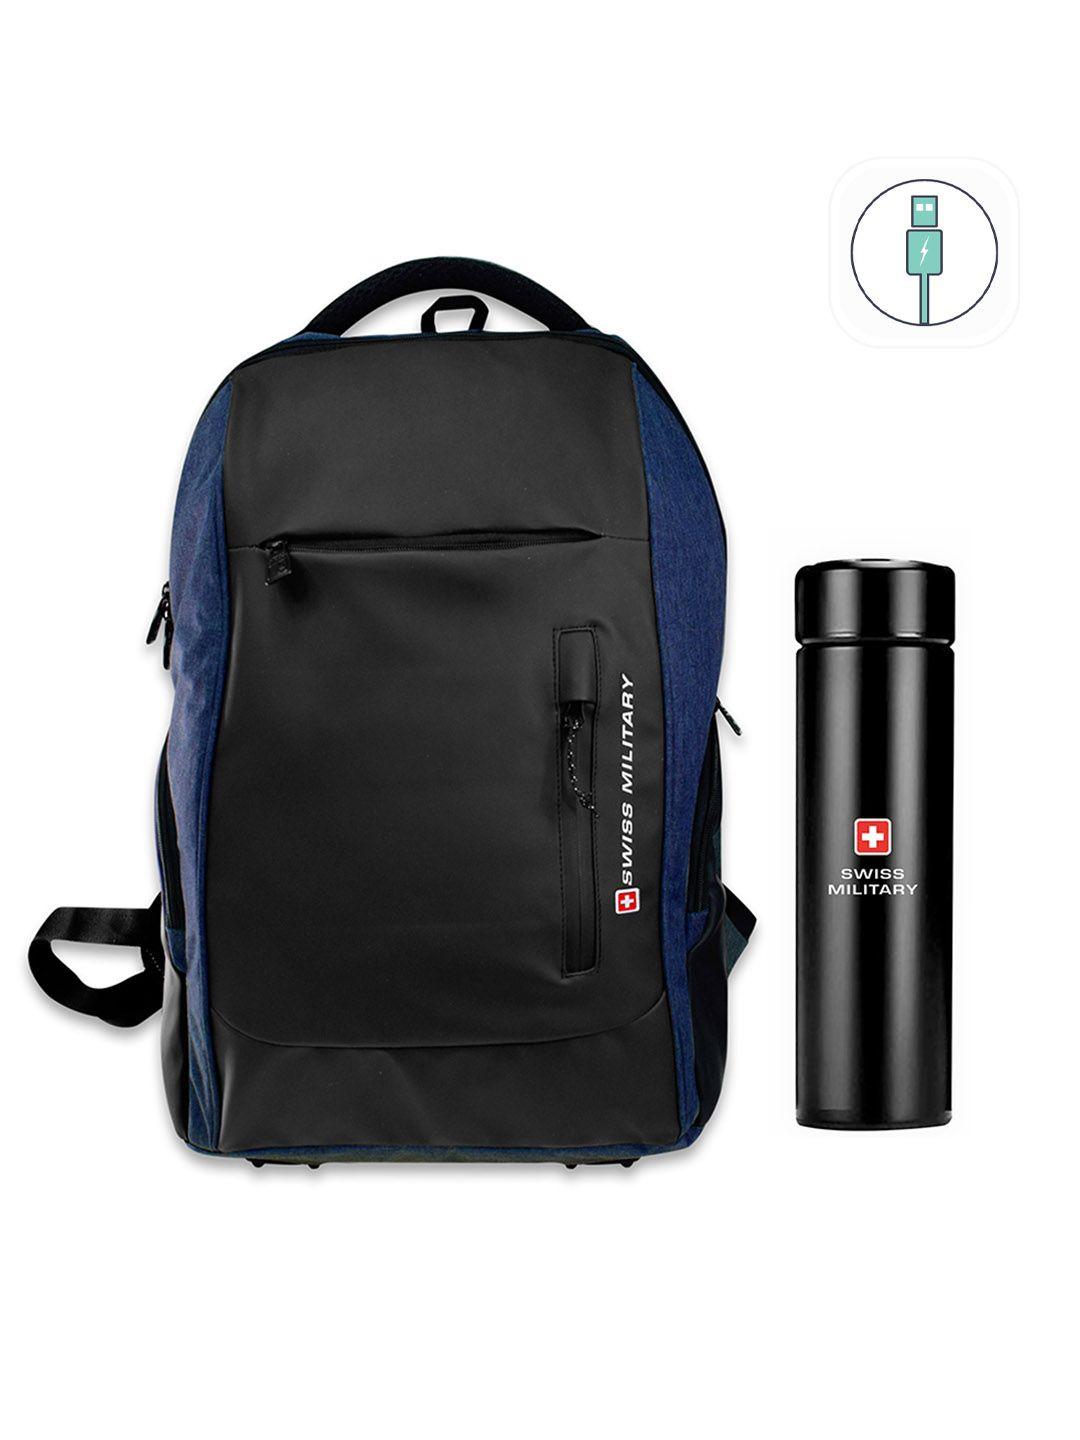 swiss military unisex blue brand logo backpack with digital vacuum flask